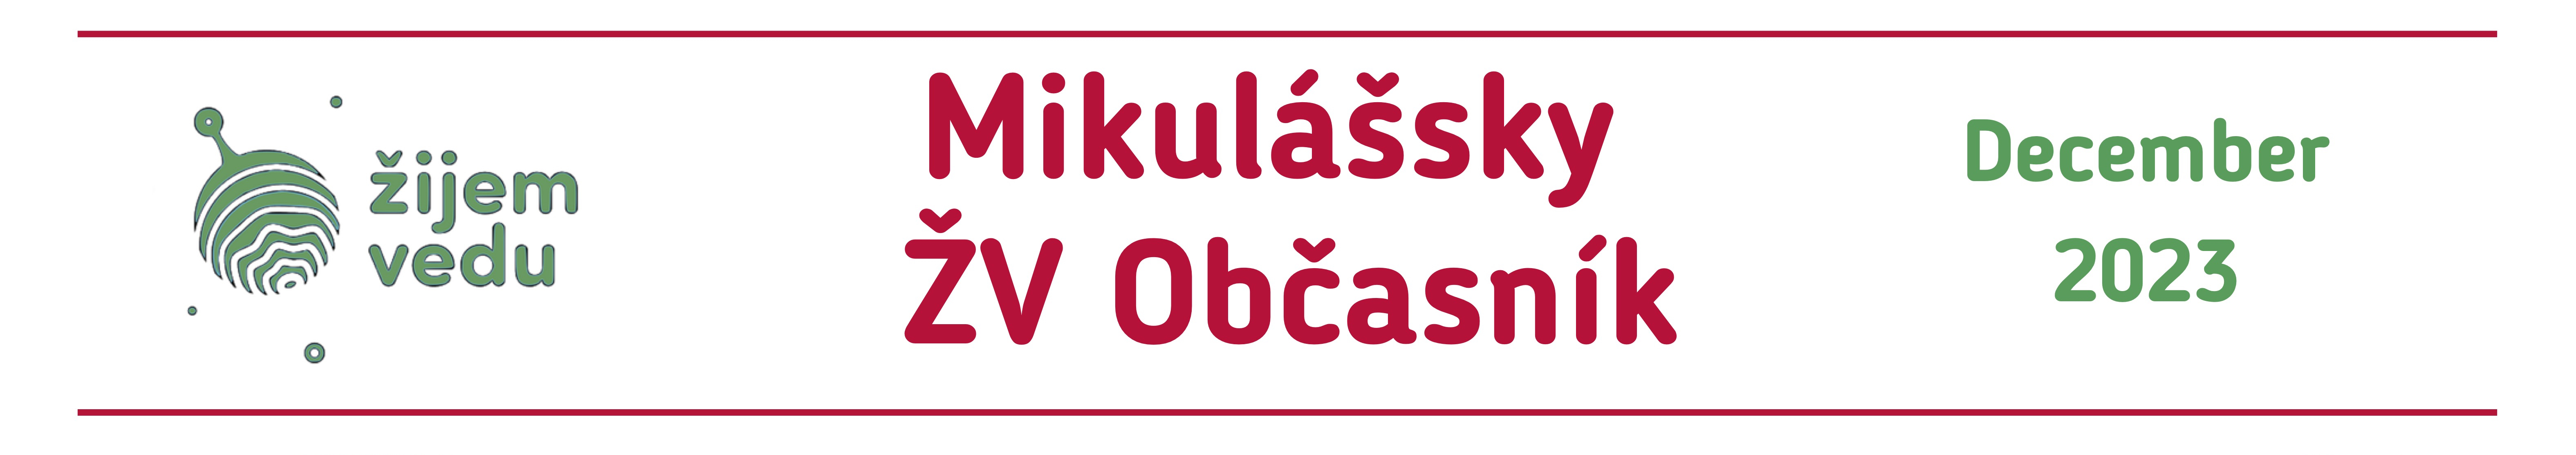 Mikulassky obcasnik